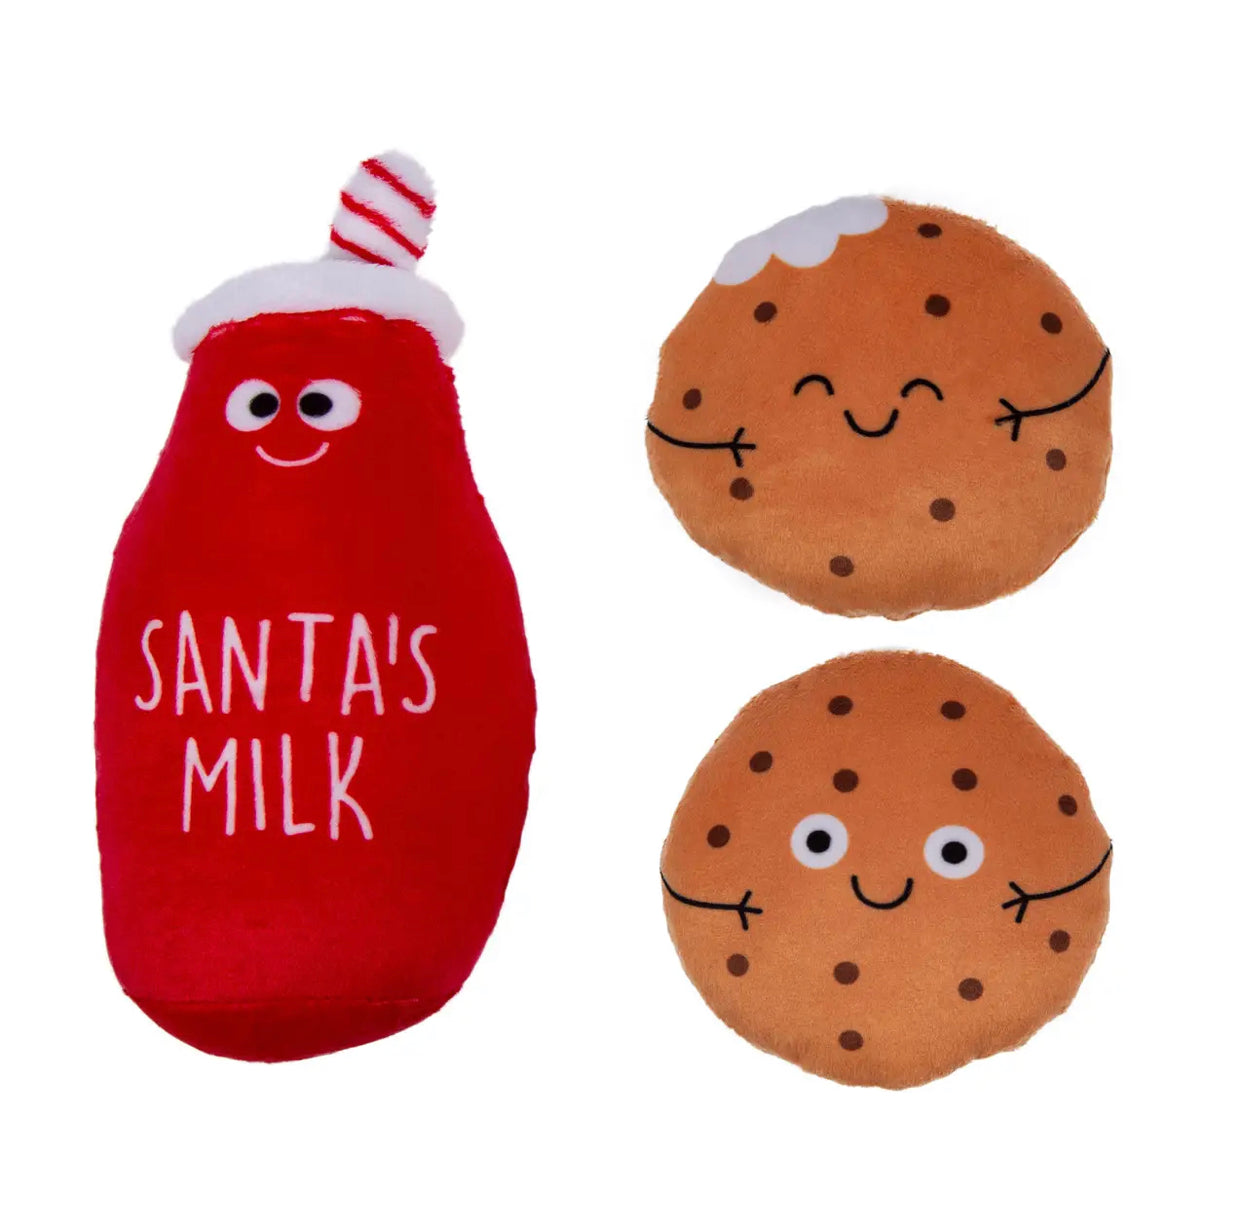 Santa’s milk and cookies dog toy